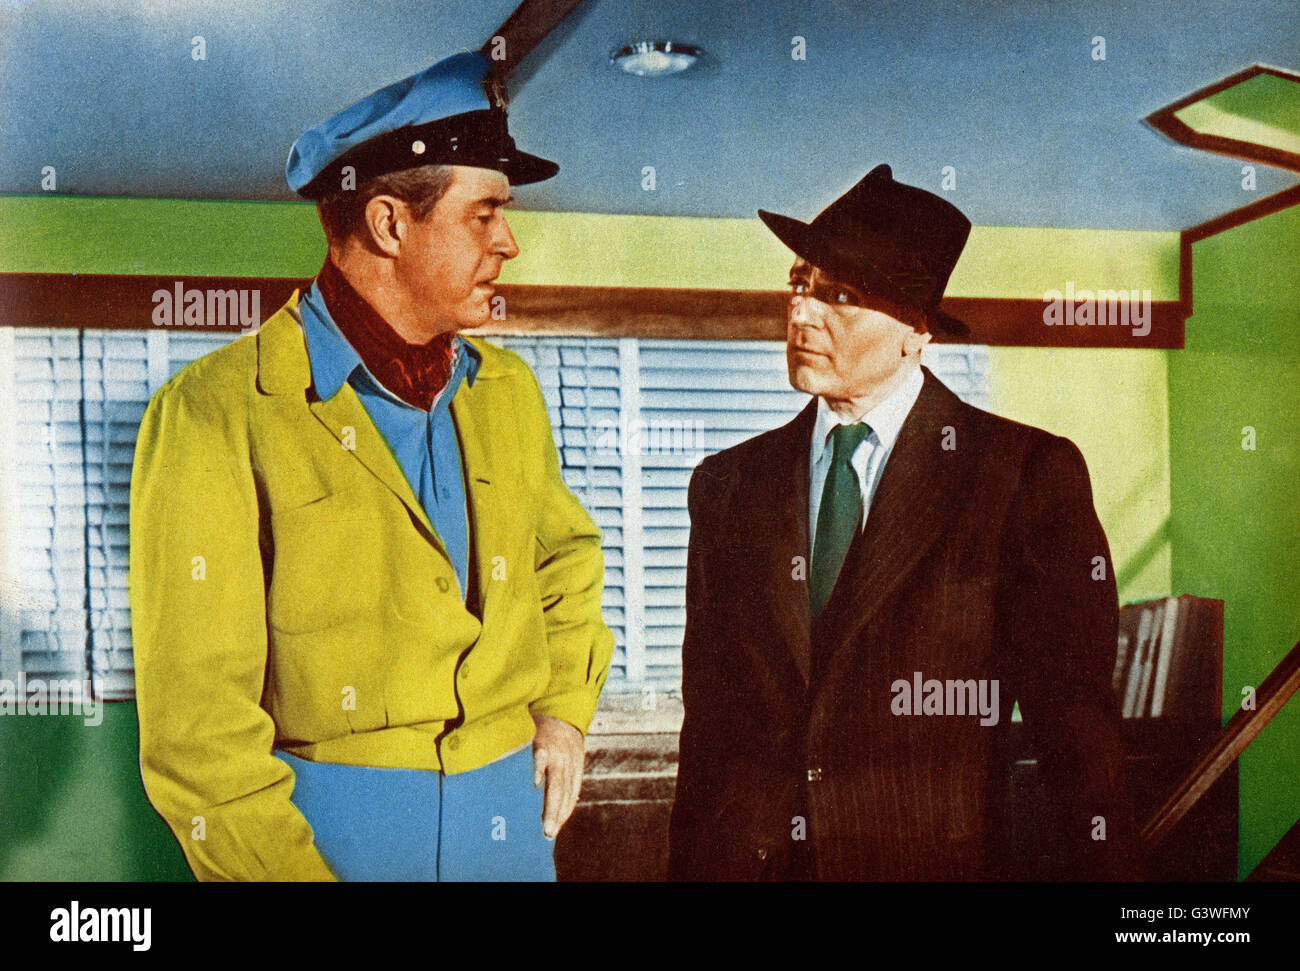 Lisbona, aka: Geheimzentrale Lisbona, USA 1956, Regie: Ray Milland, Darsteller: Ray Milland, Francis Lederer Foto Stock